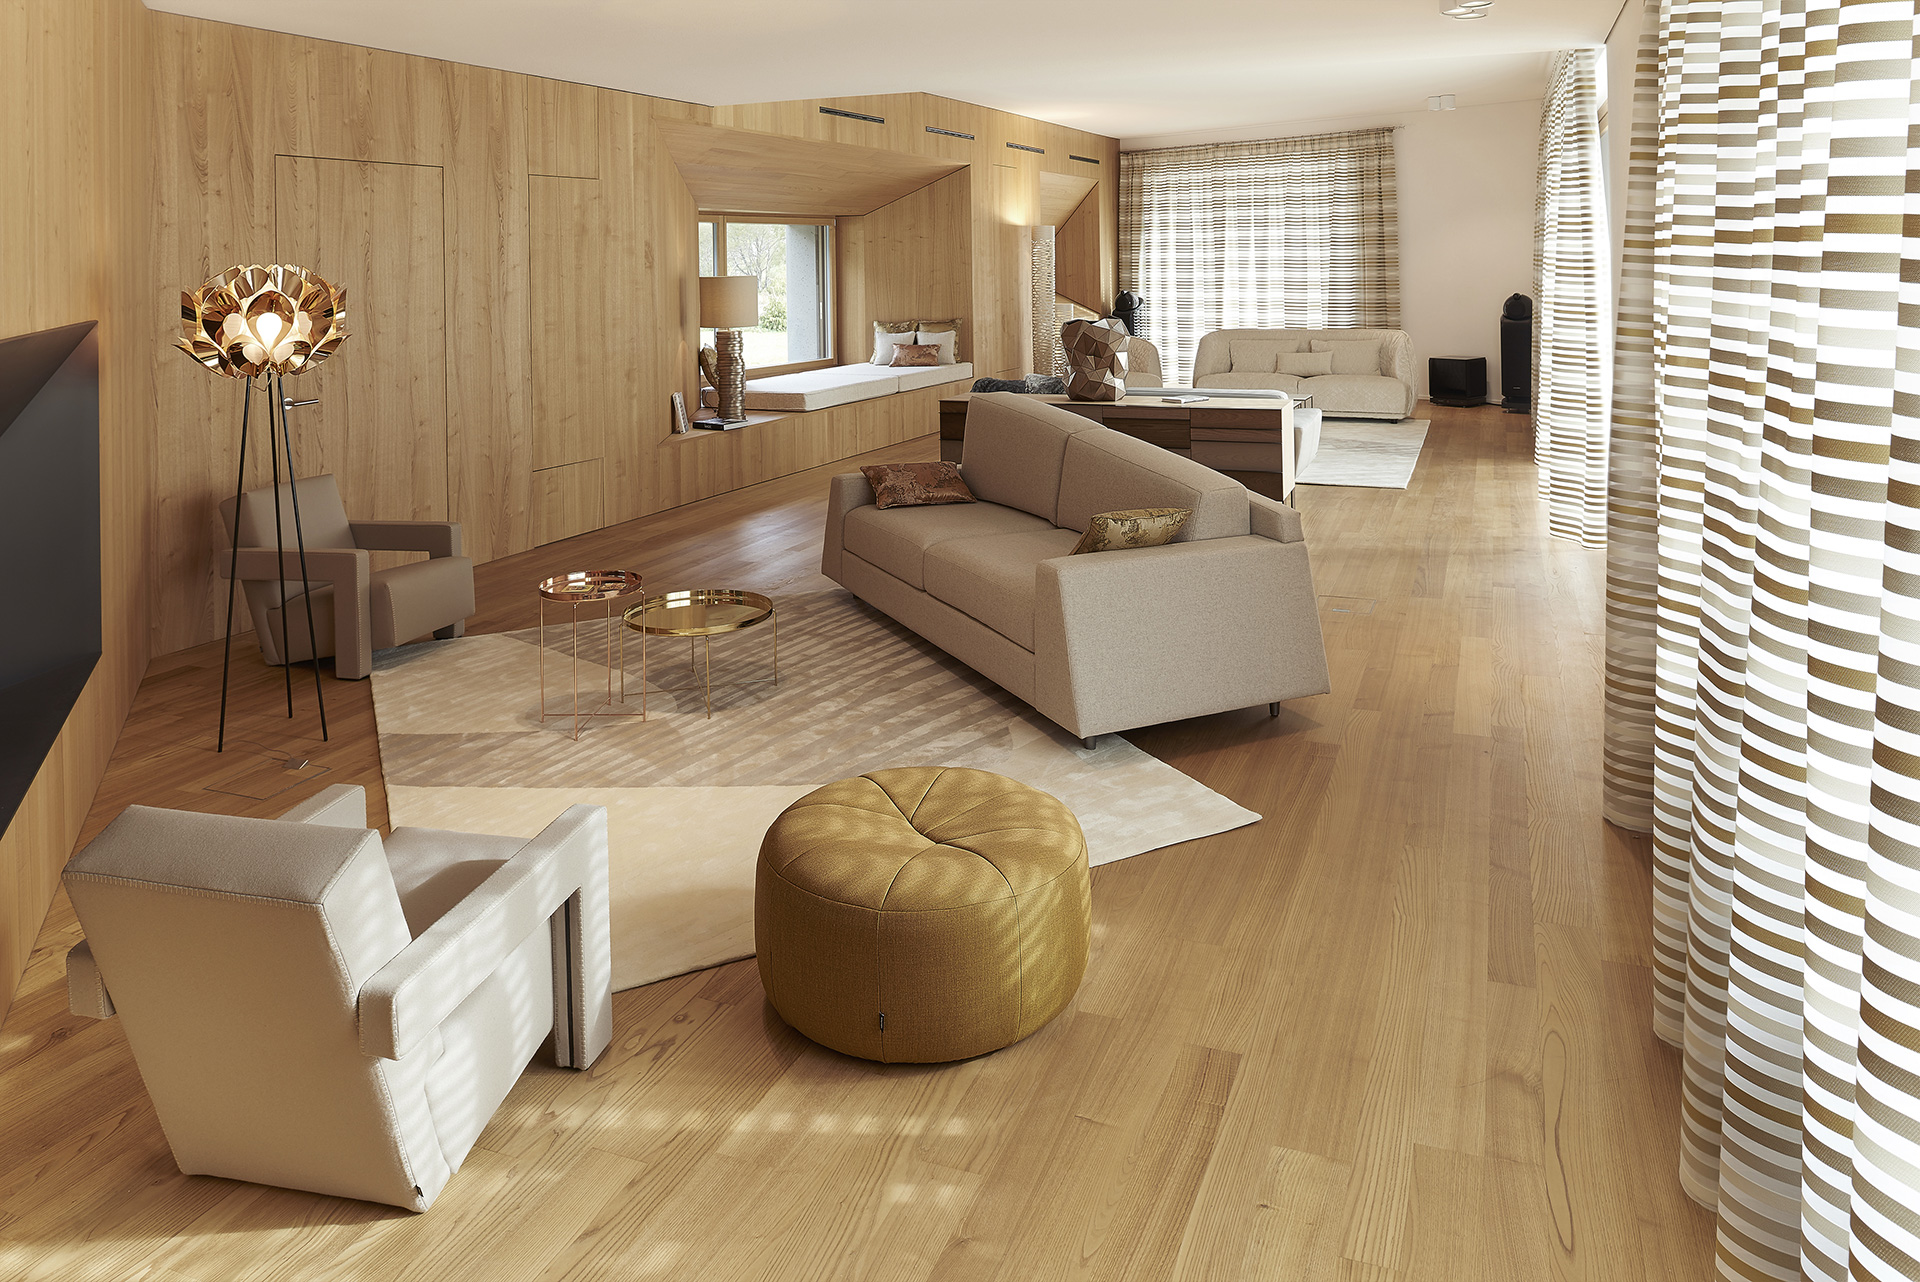 Double Lounge of a luxurious villa in Alps by Borella Art Design